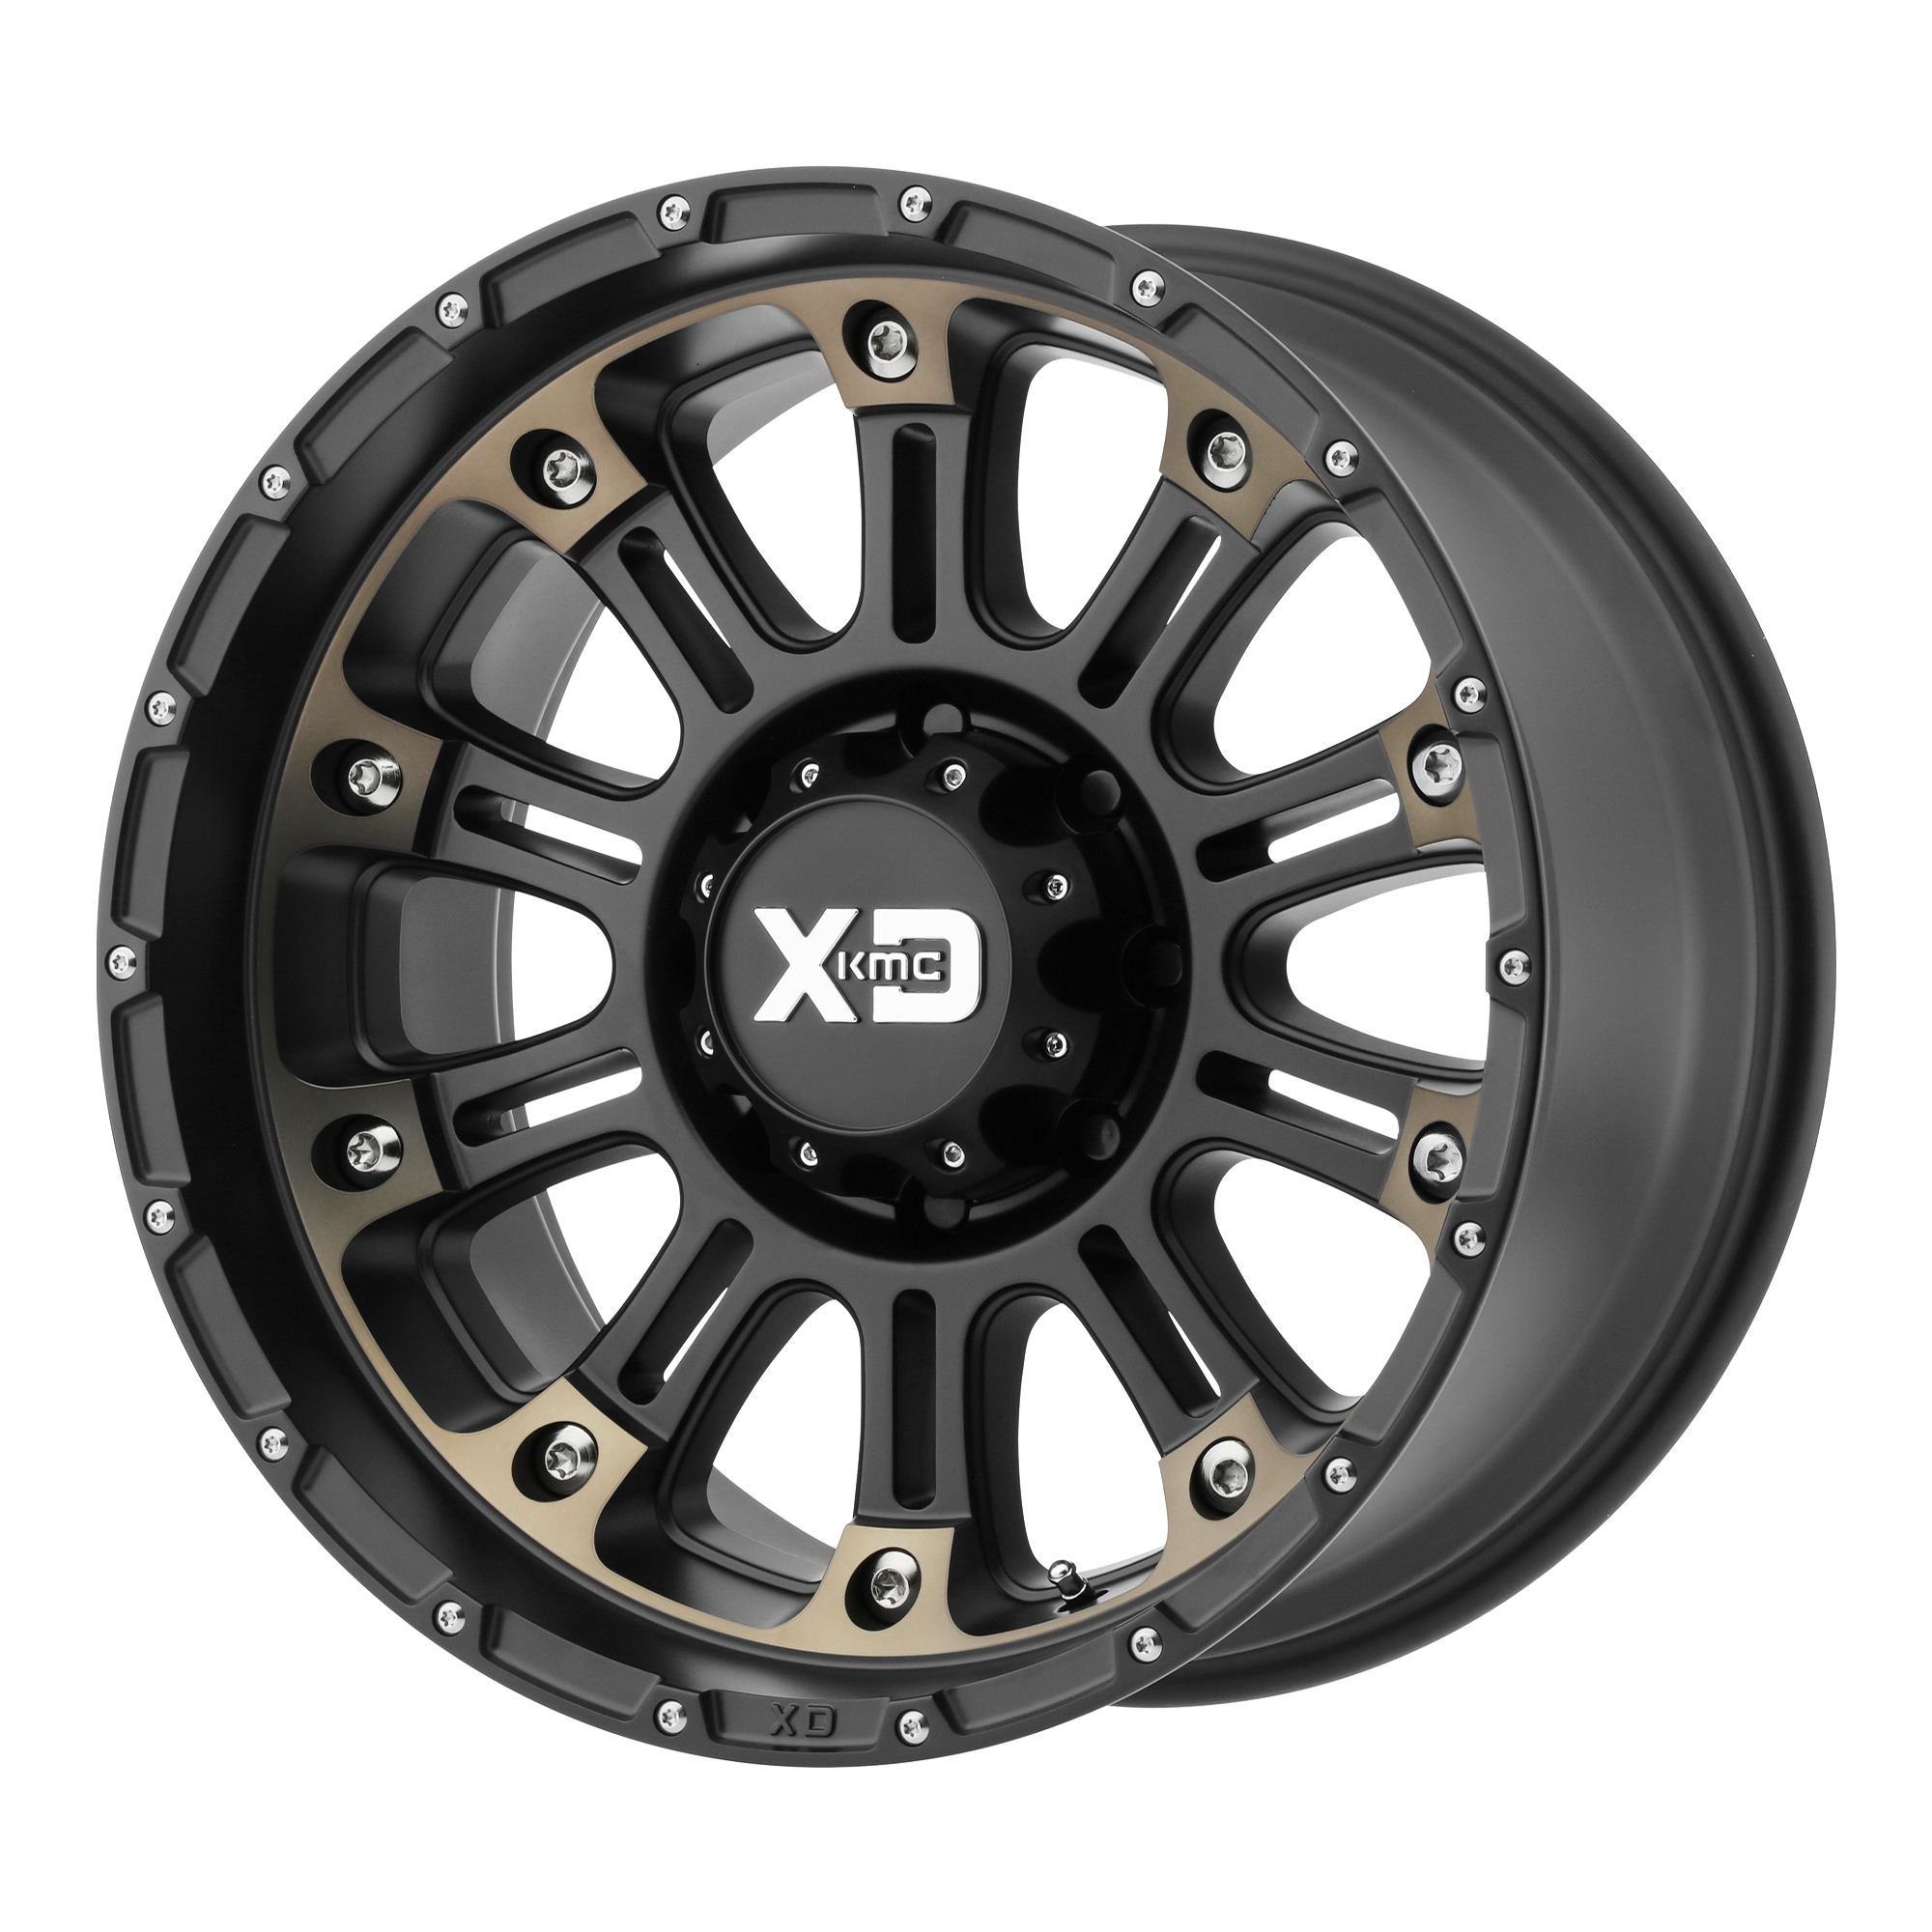 HOSS II 20x9 5x150.00 SATIN BLACK MACH W/ DARK TINT (18 mm) - Tires and Engine Performance